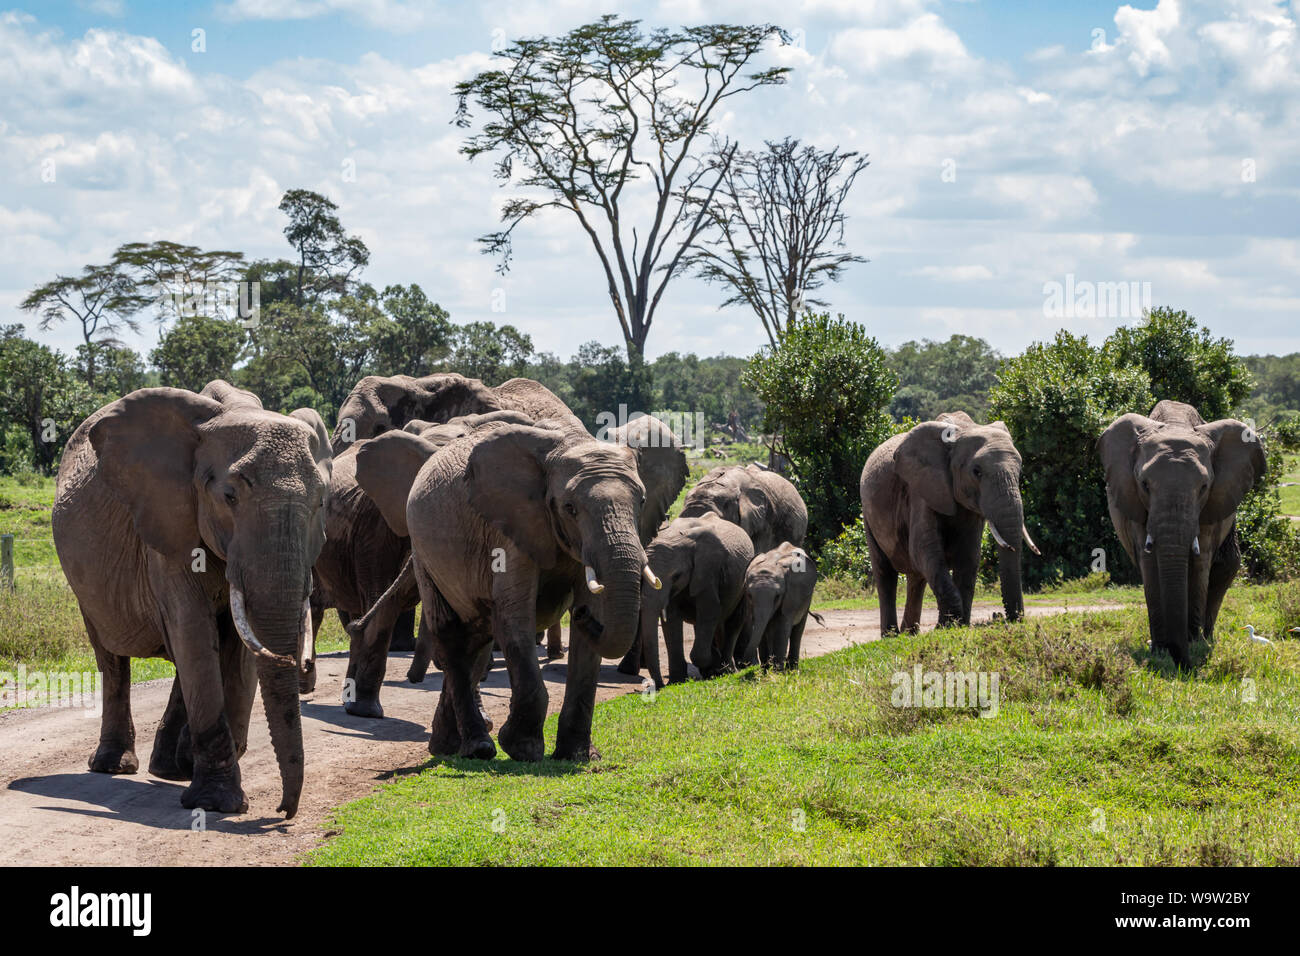 Colour wildlife photograph of herd of Elephants walking towards camera in wild Kenyan landscape on dirt track, taken on Ol Pejeta conservancy, Kenya. Stock Photo